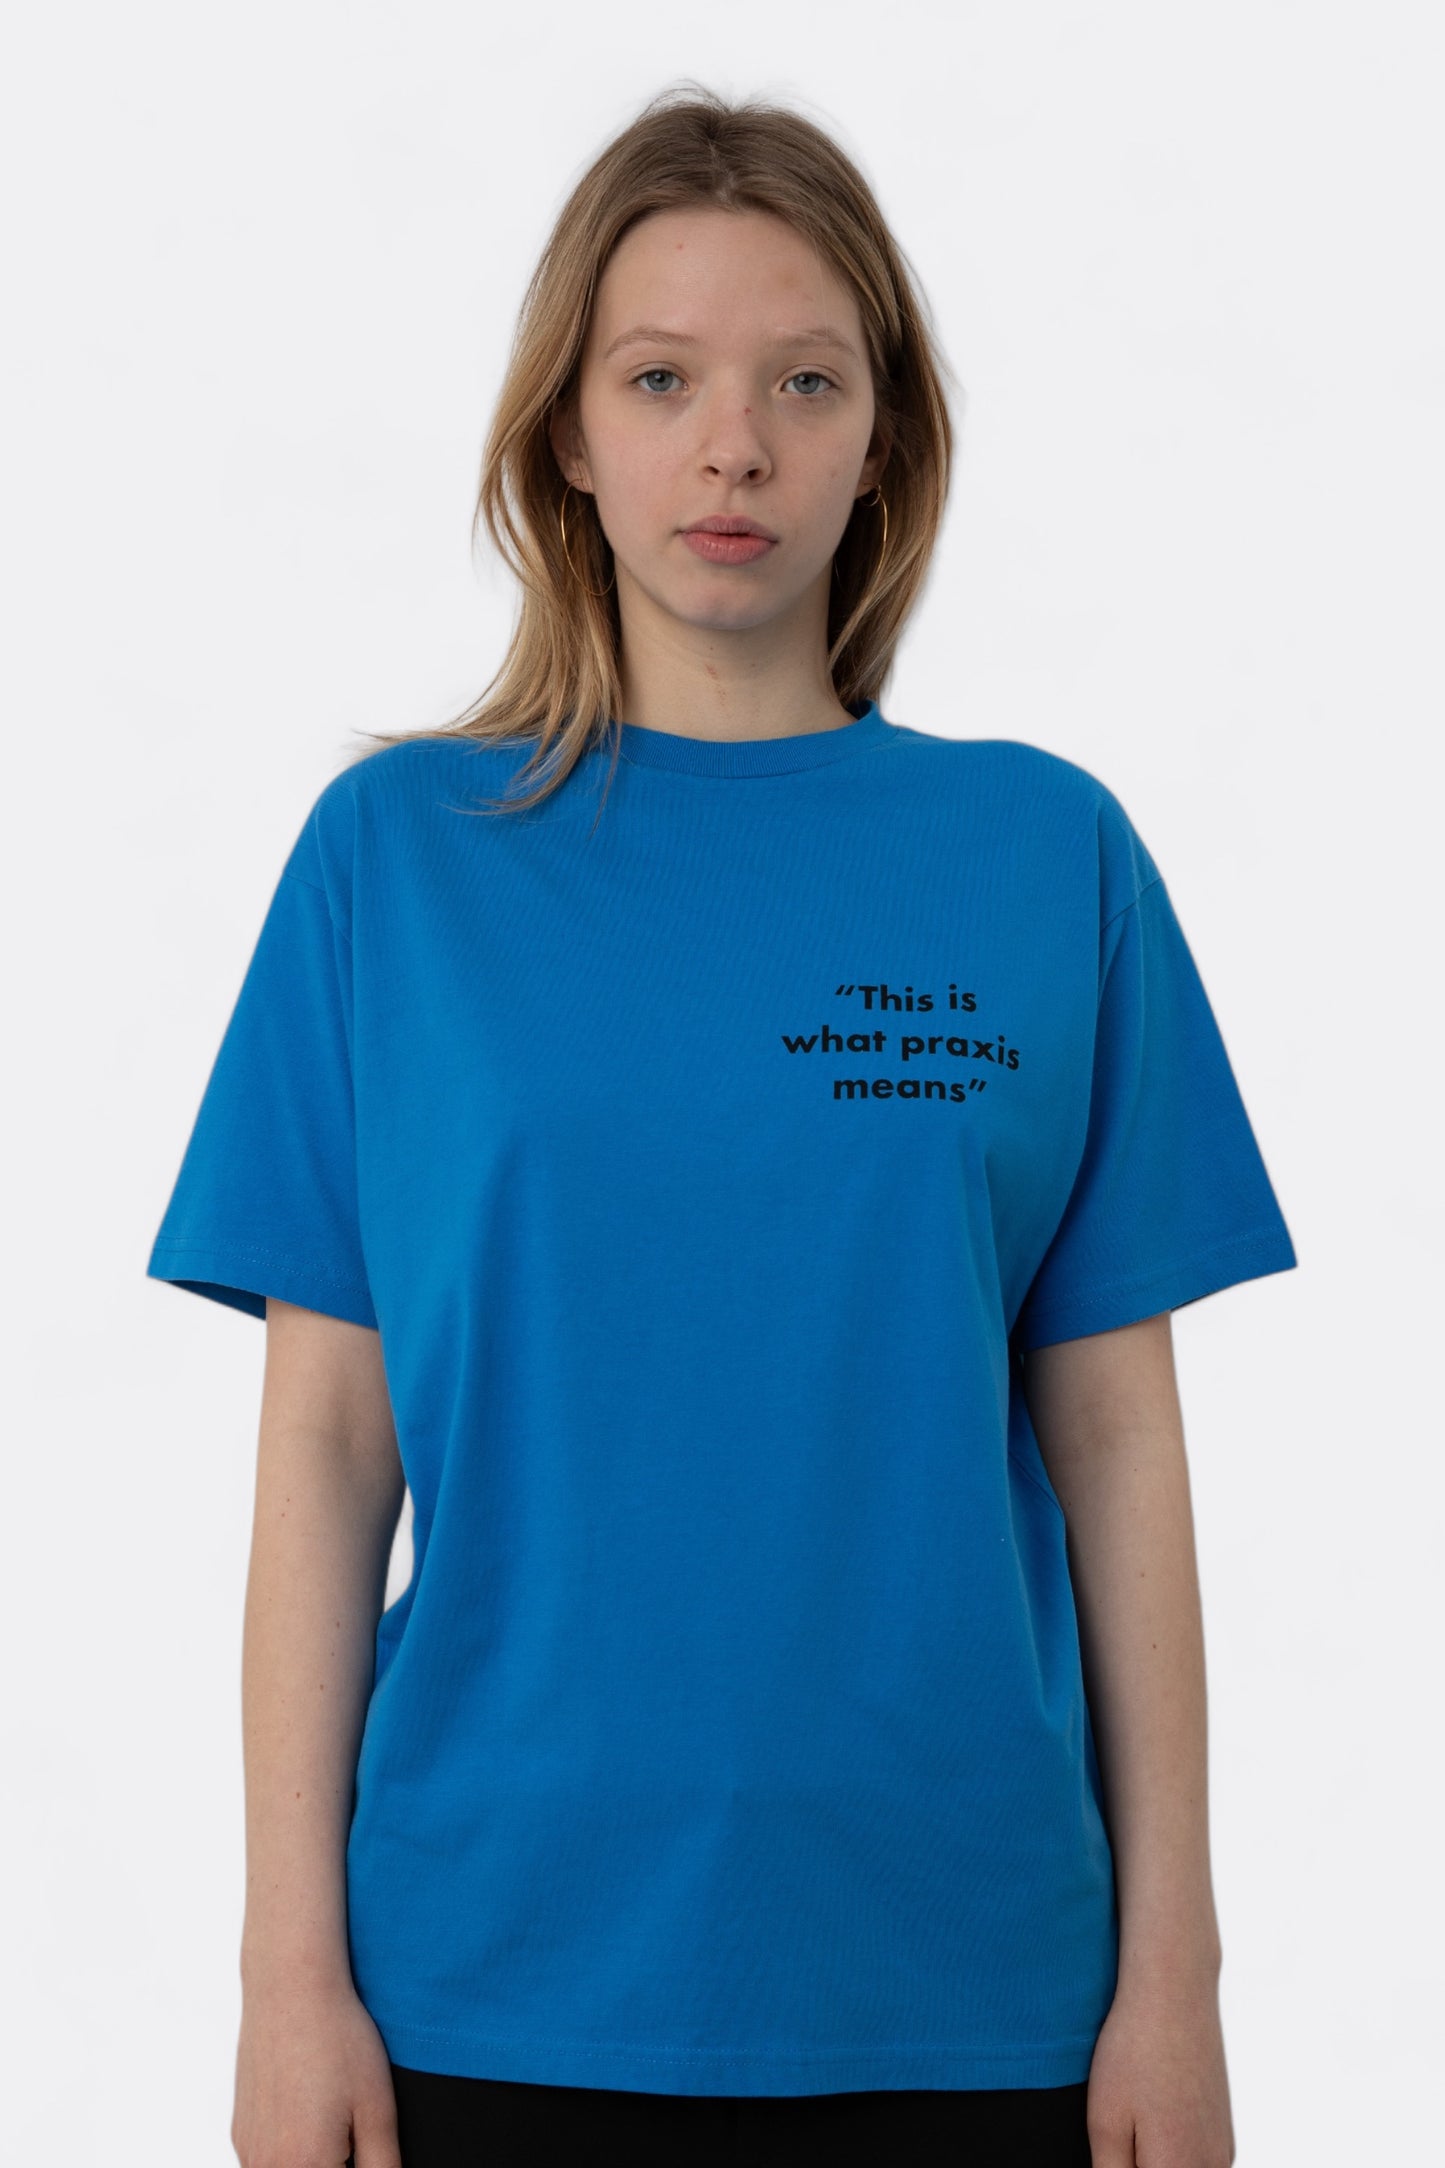 Public Possession - Praxis/Theorie T-Shirt (Cute Blue)